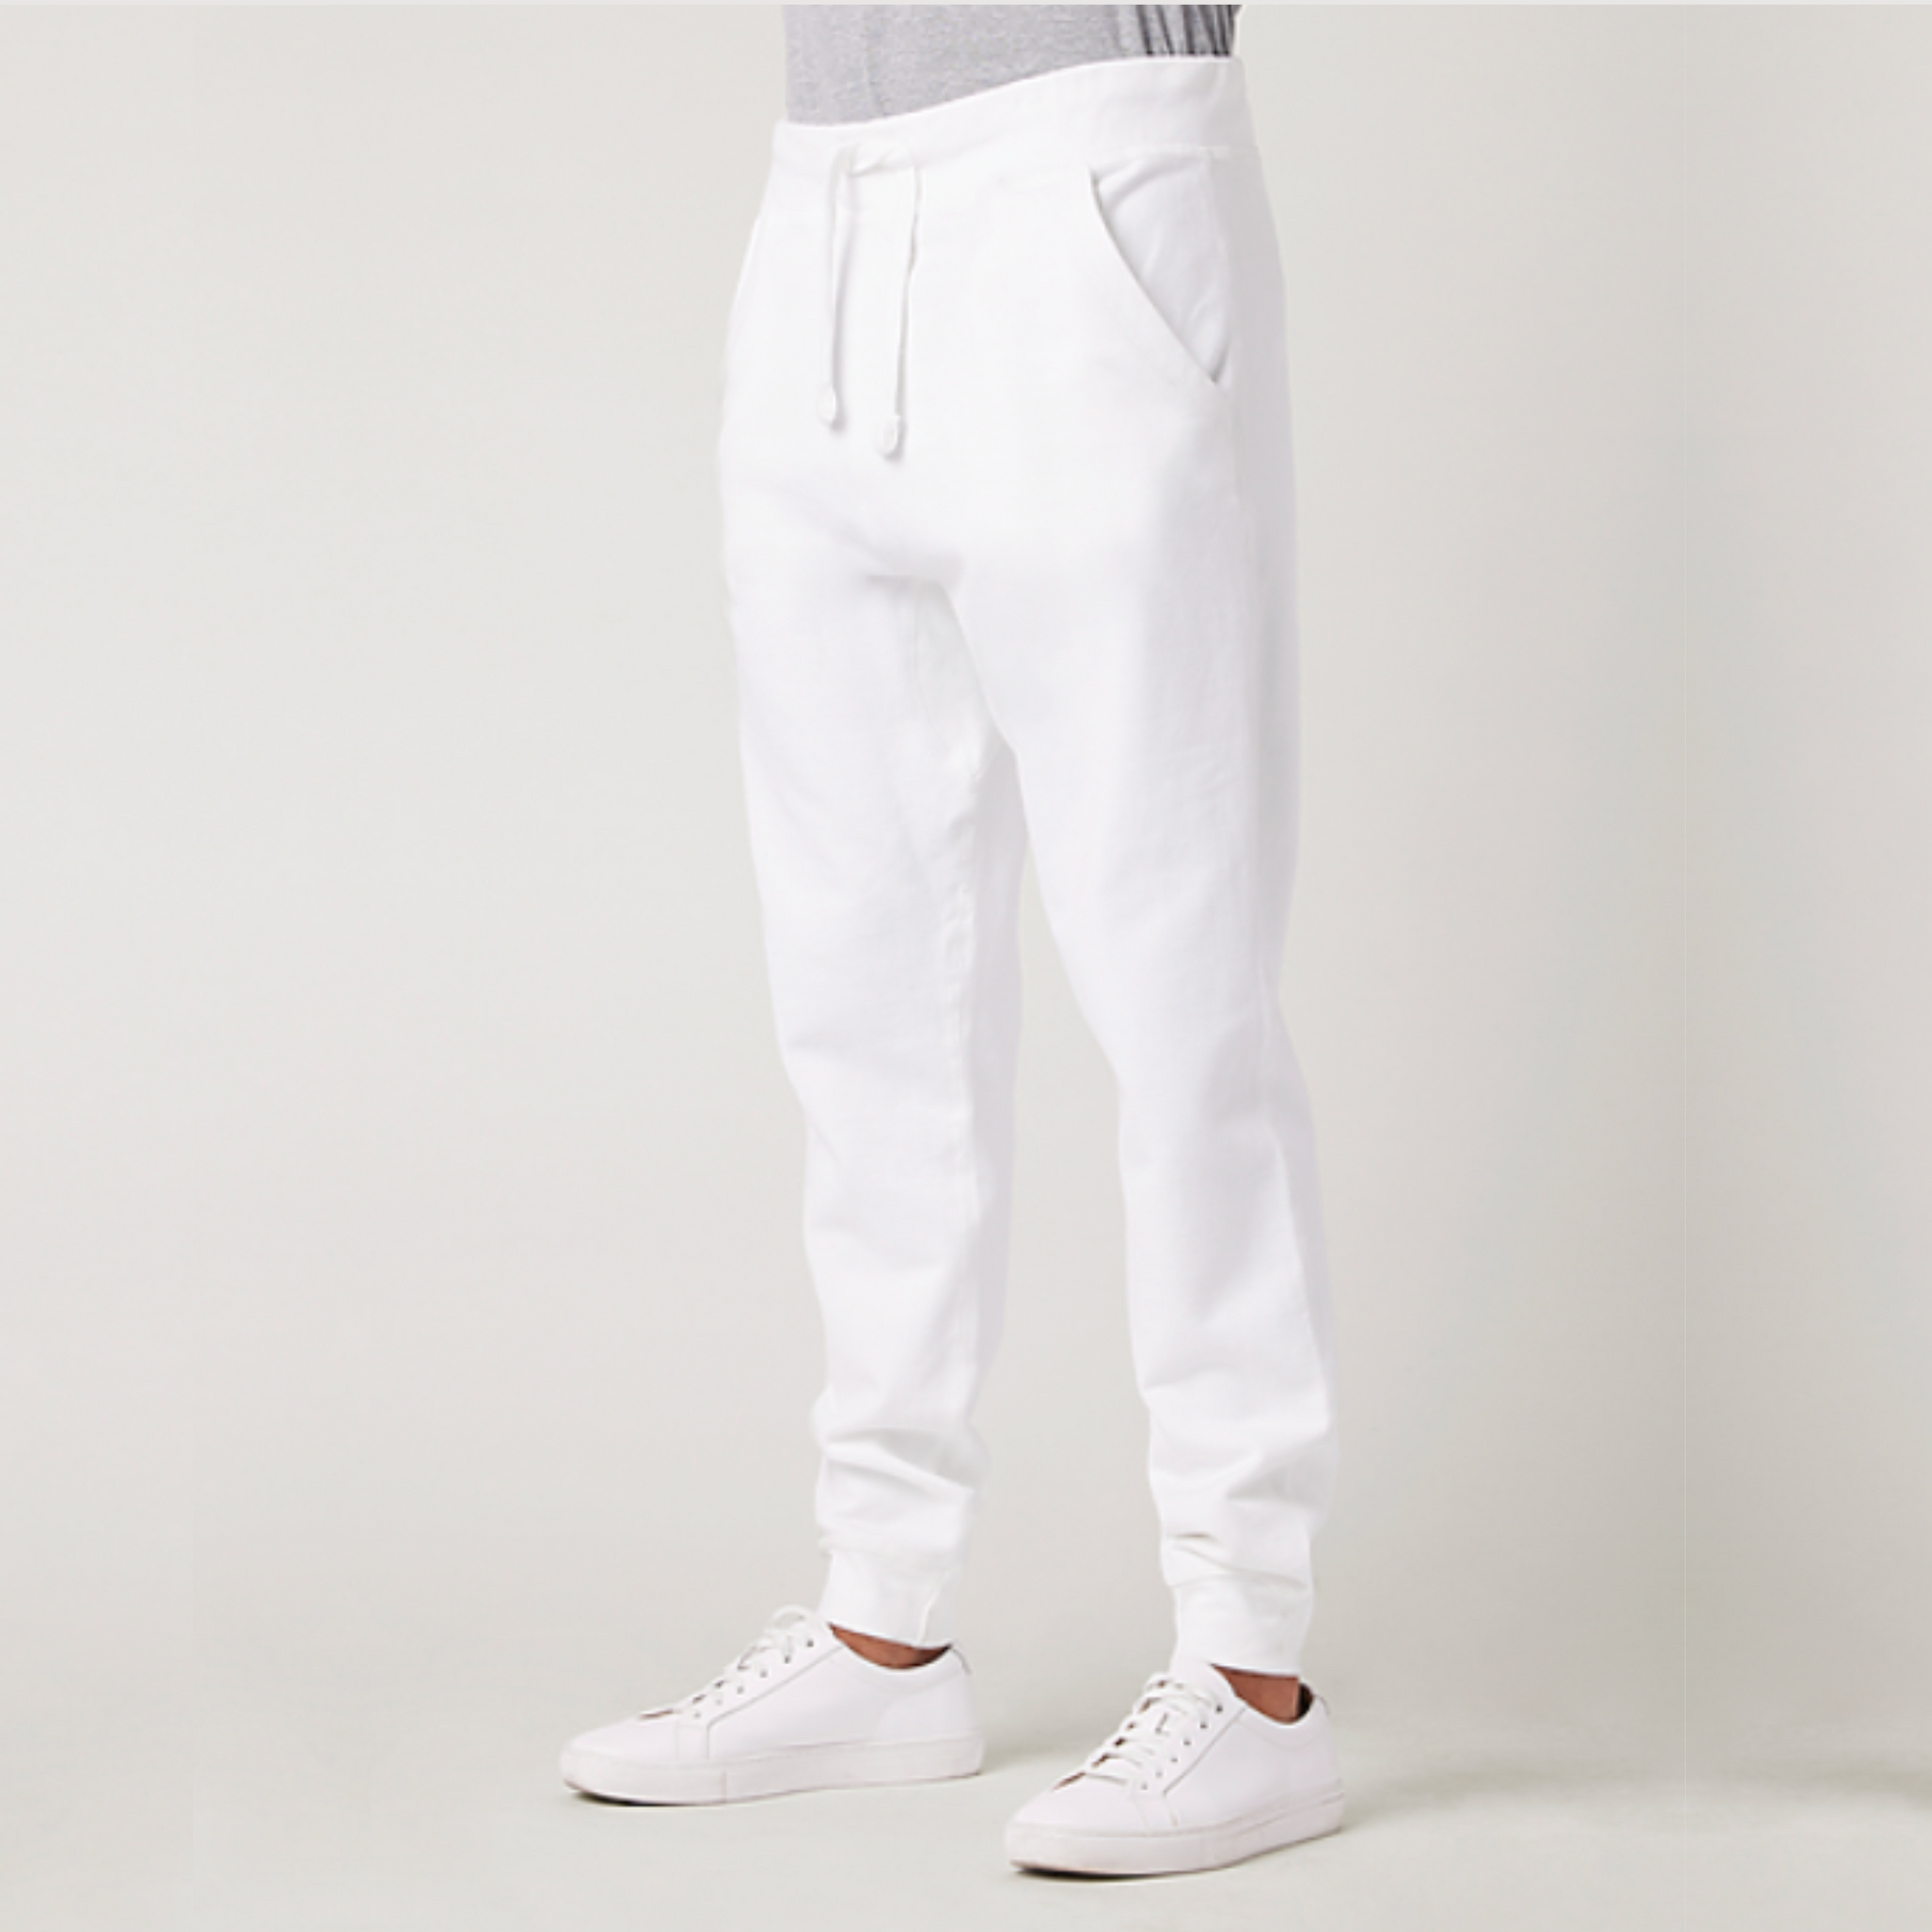 Cosmos x White Joggers Sweatpants, Luxury Streetwear